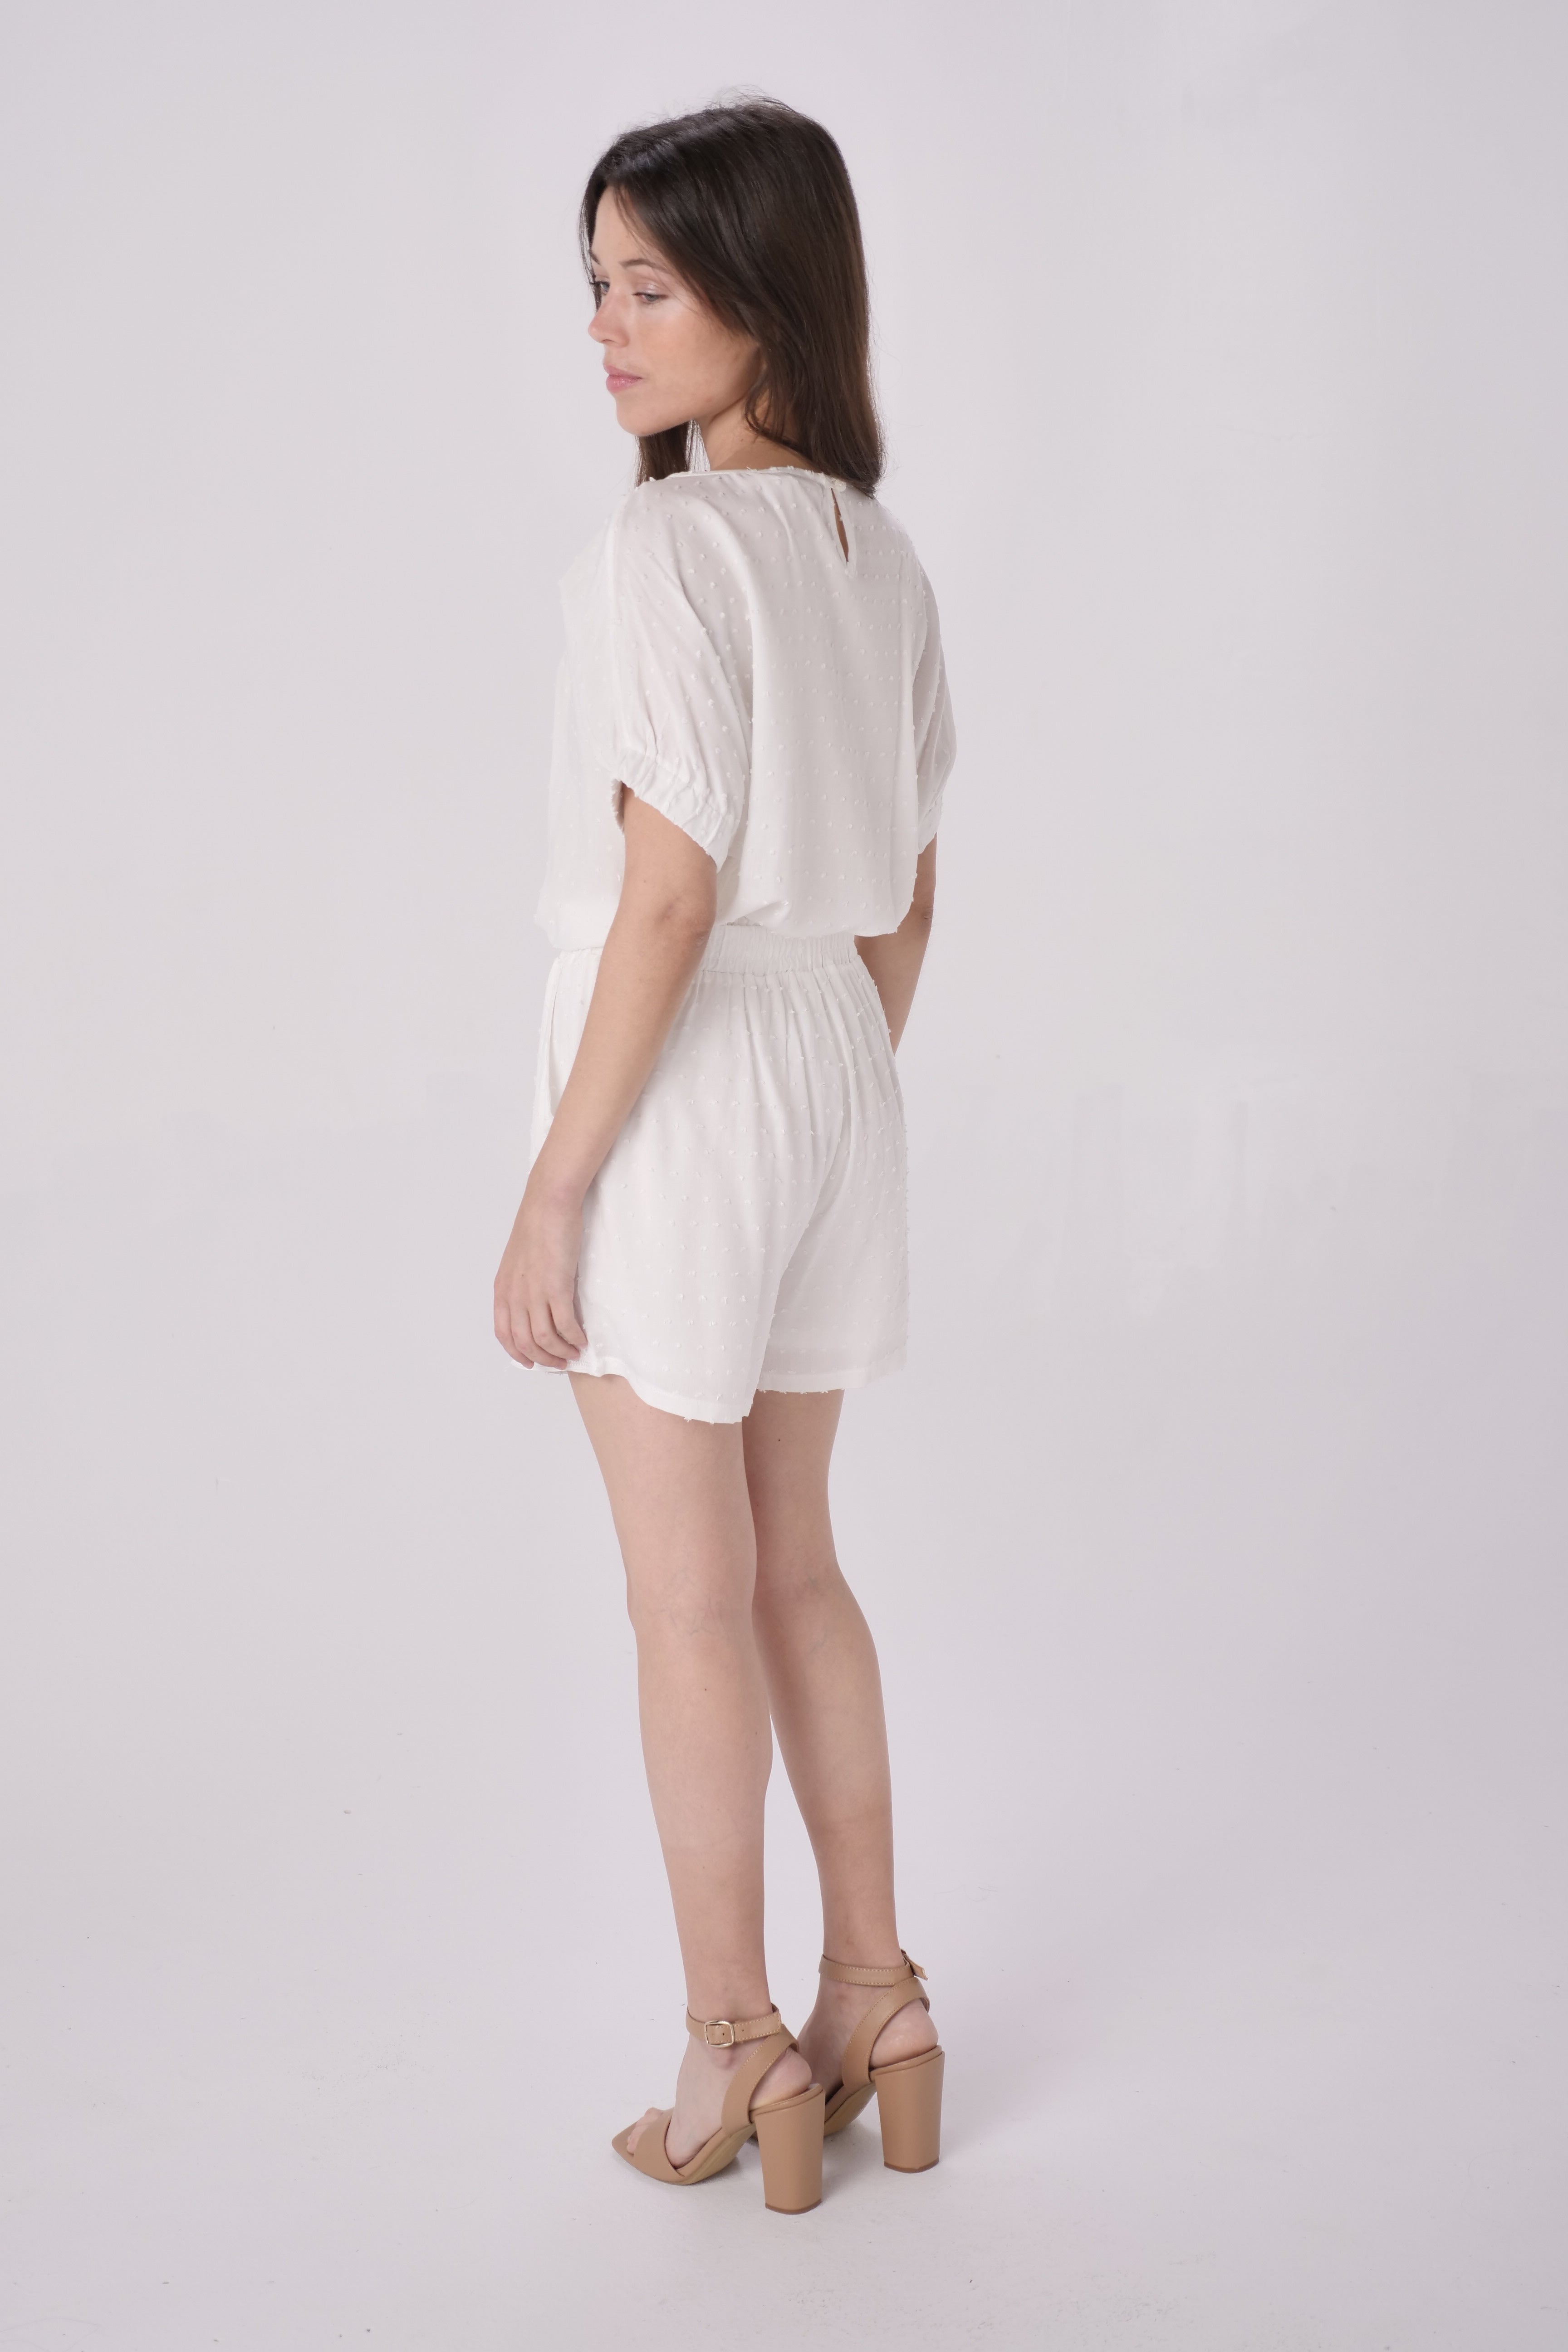 SGOMBERO CANTINE, Beige Women's Short Dress